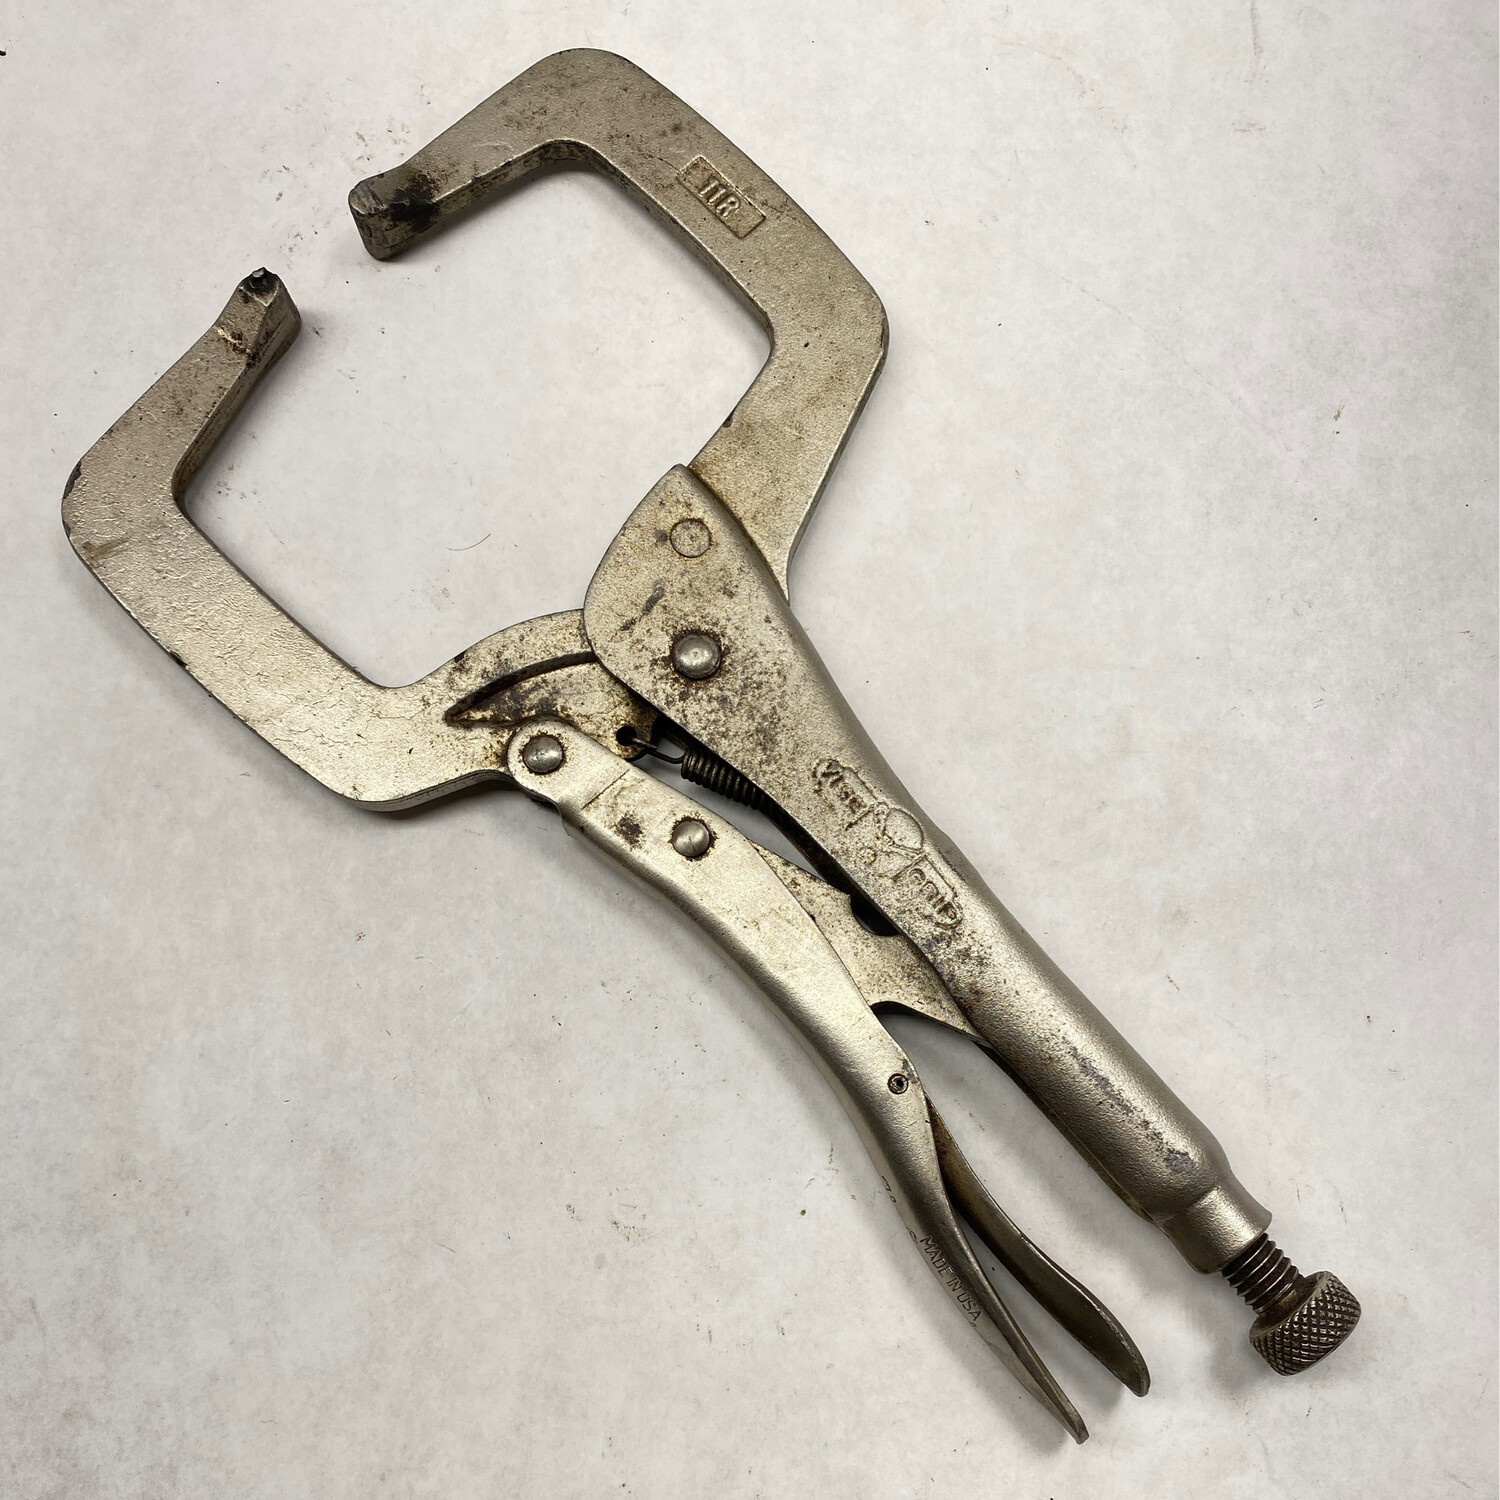 Irwin Vice Grip USA 11” C-Clamp Locking Pliers, 11R